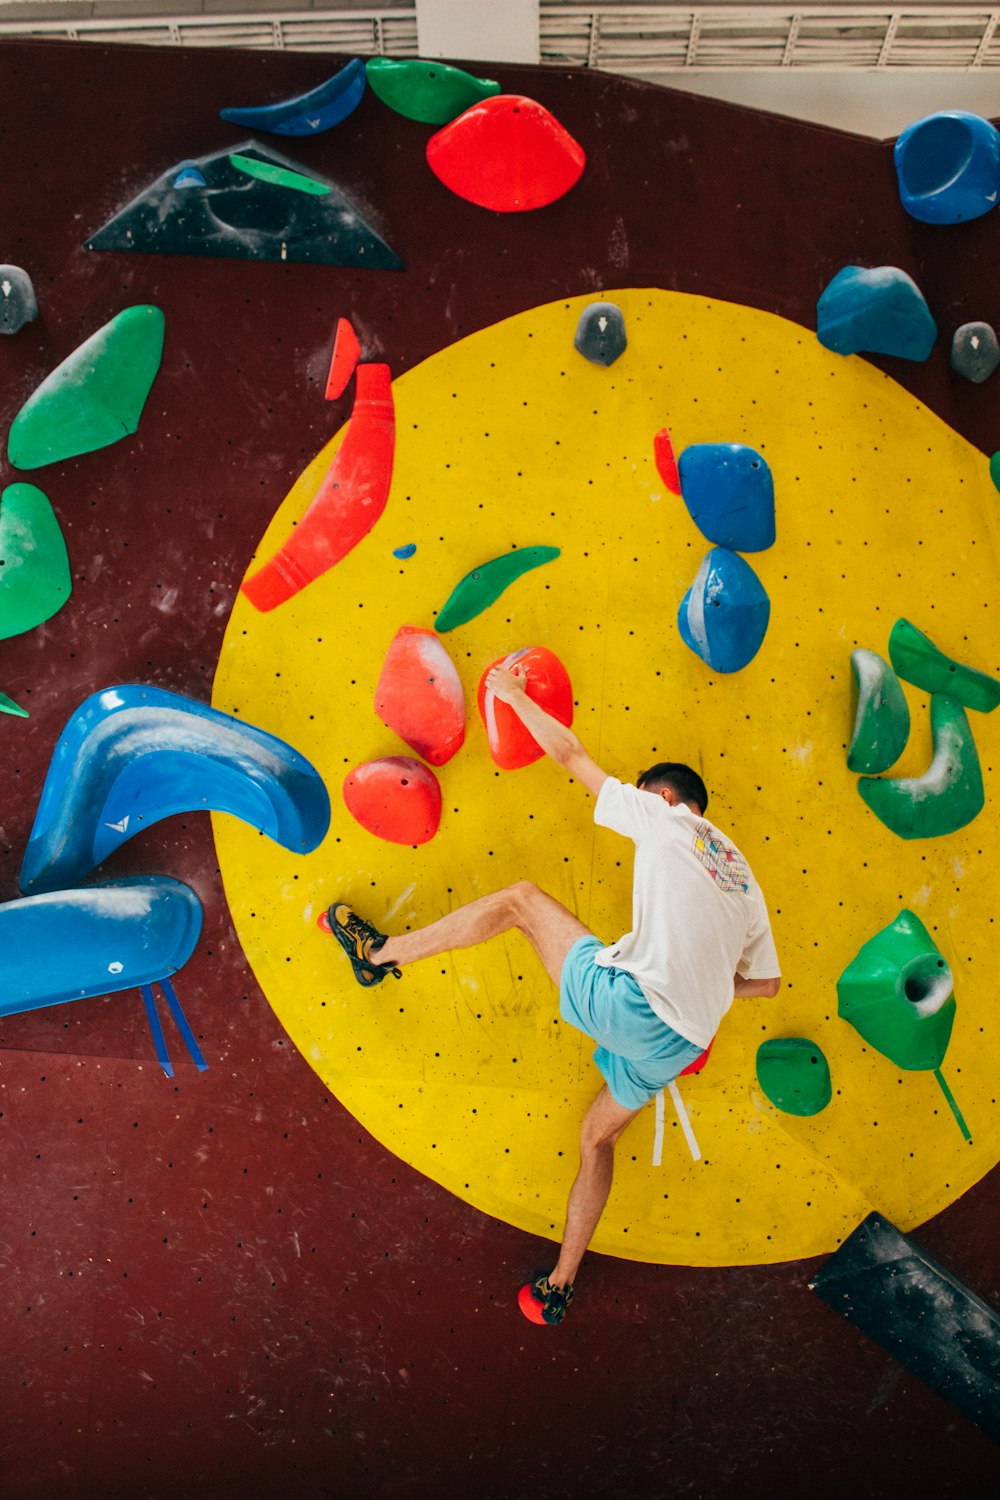 a man climbing on a climbing wall in a gym